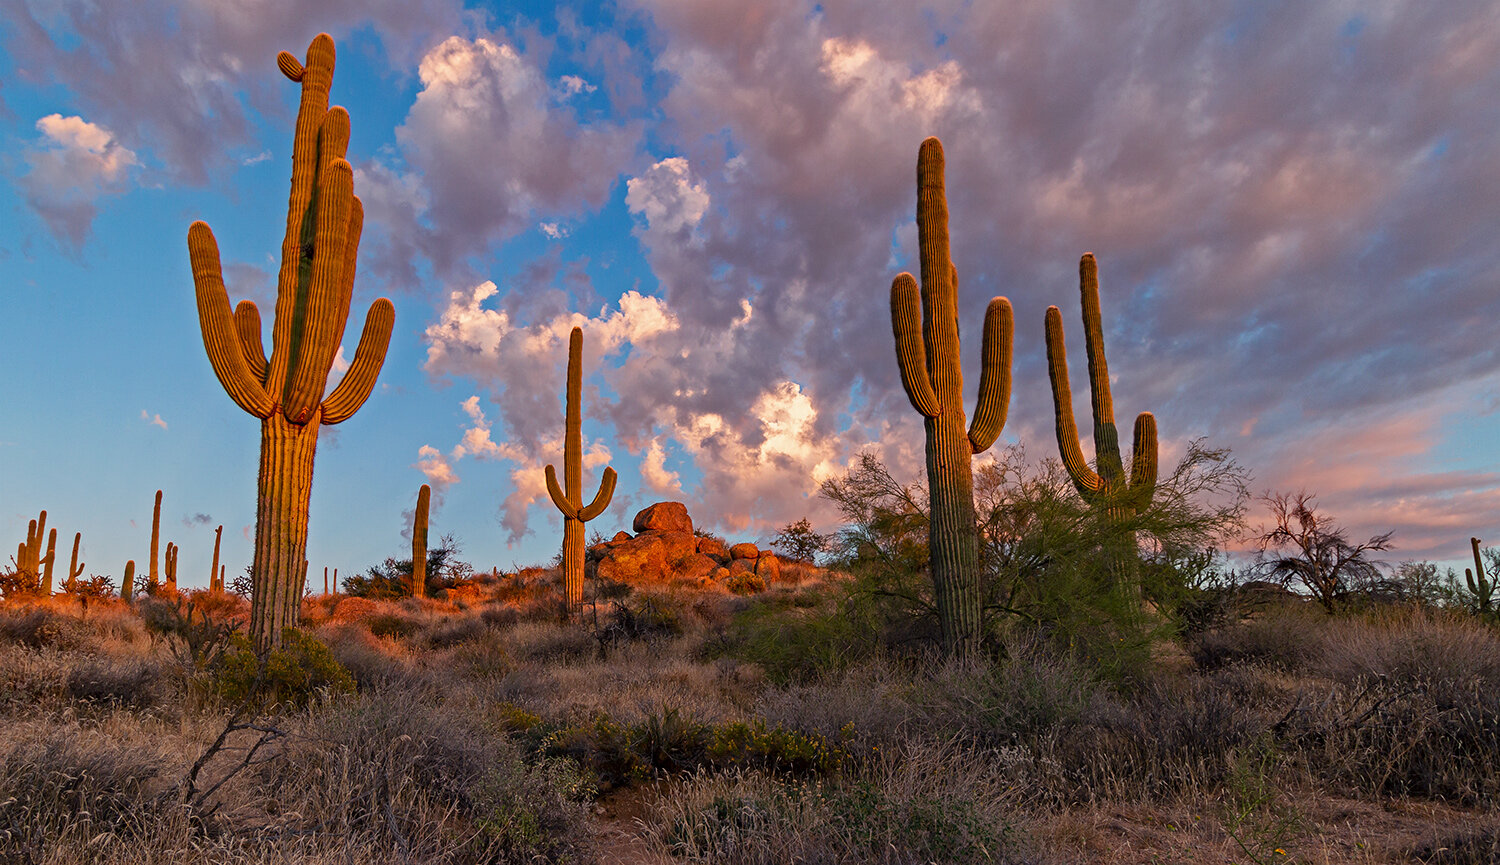 Southwest USA Cactus Stock Images, Photos | Photography